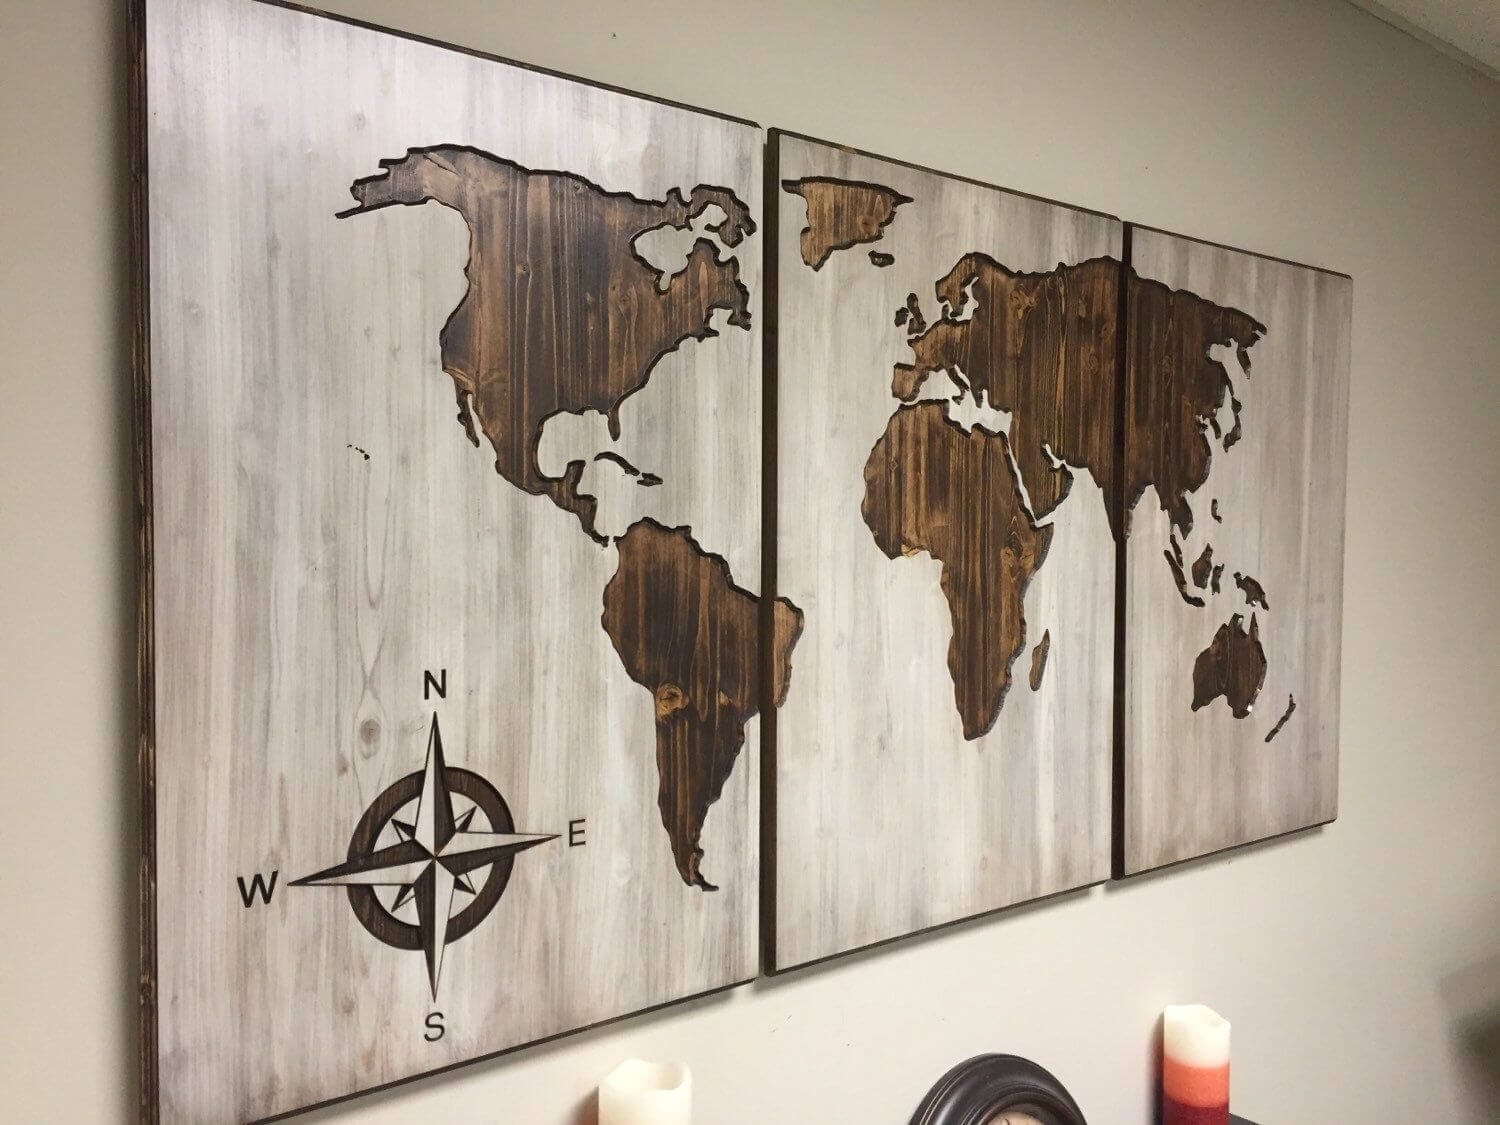 Wooden art panels designed as maps